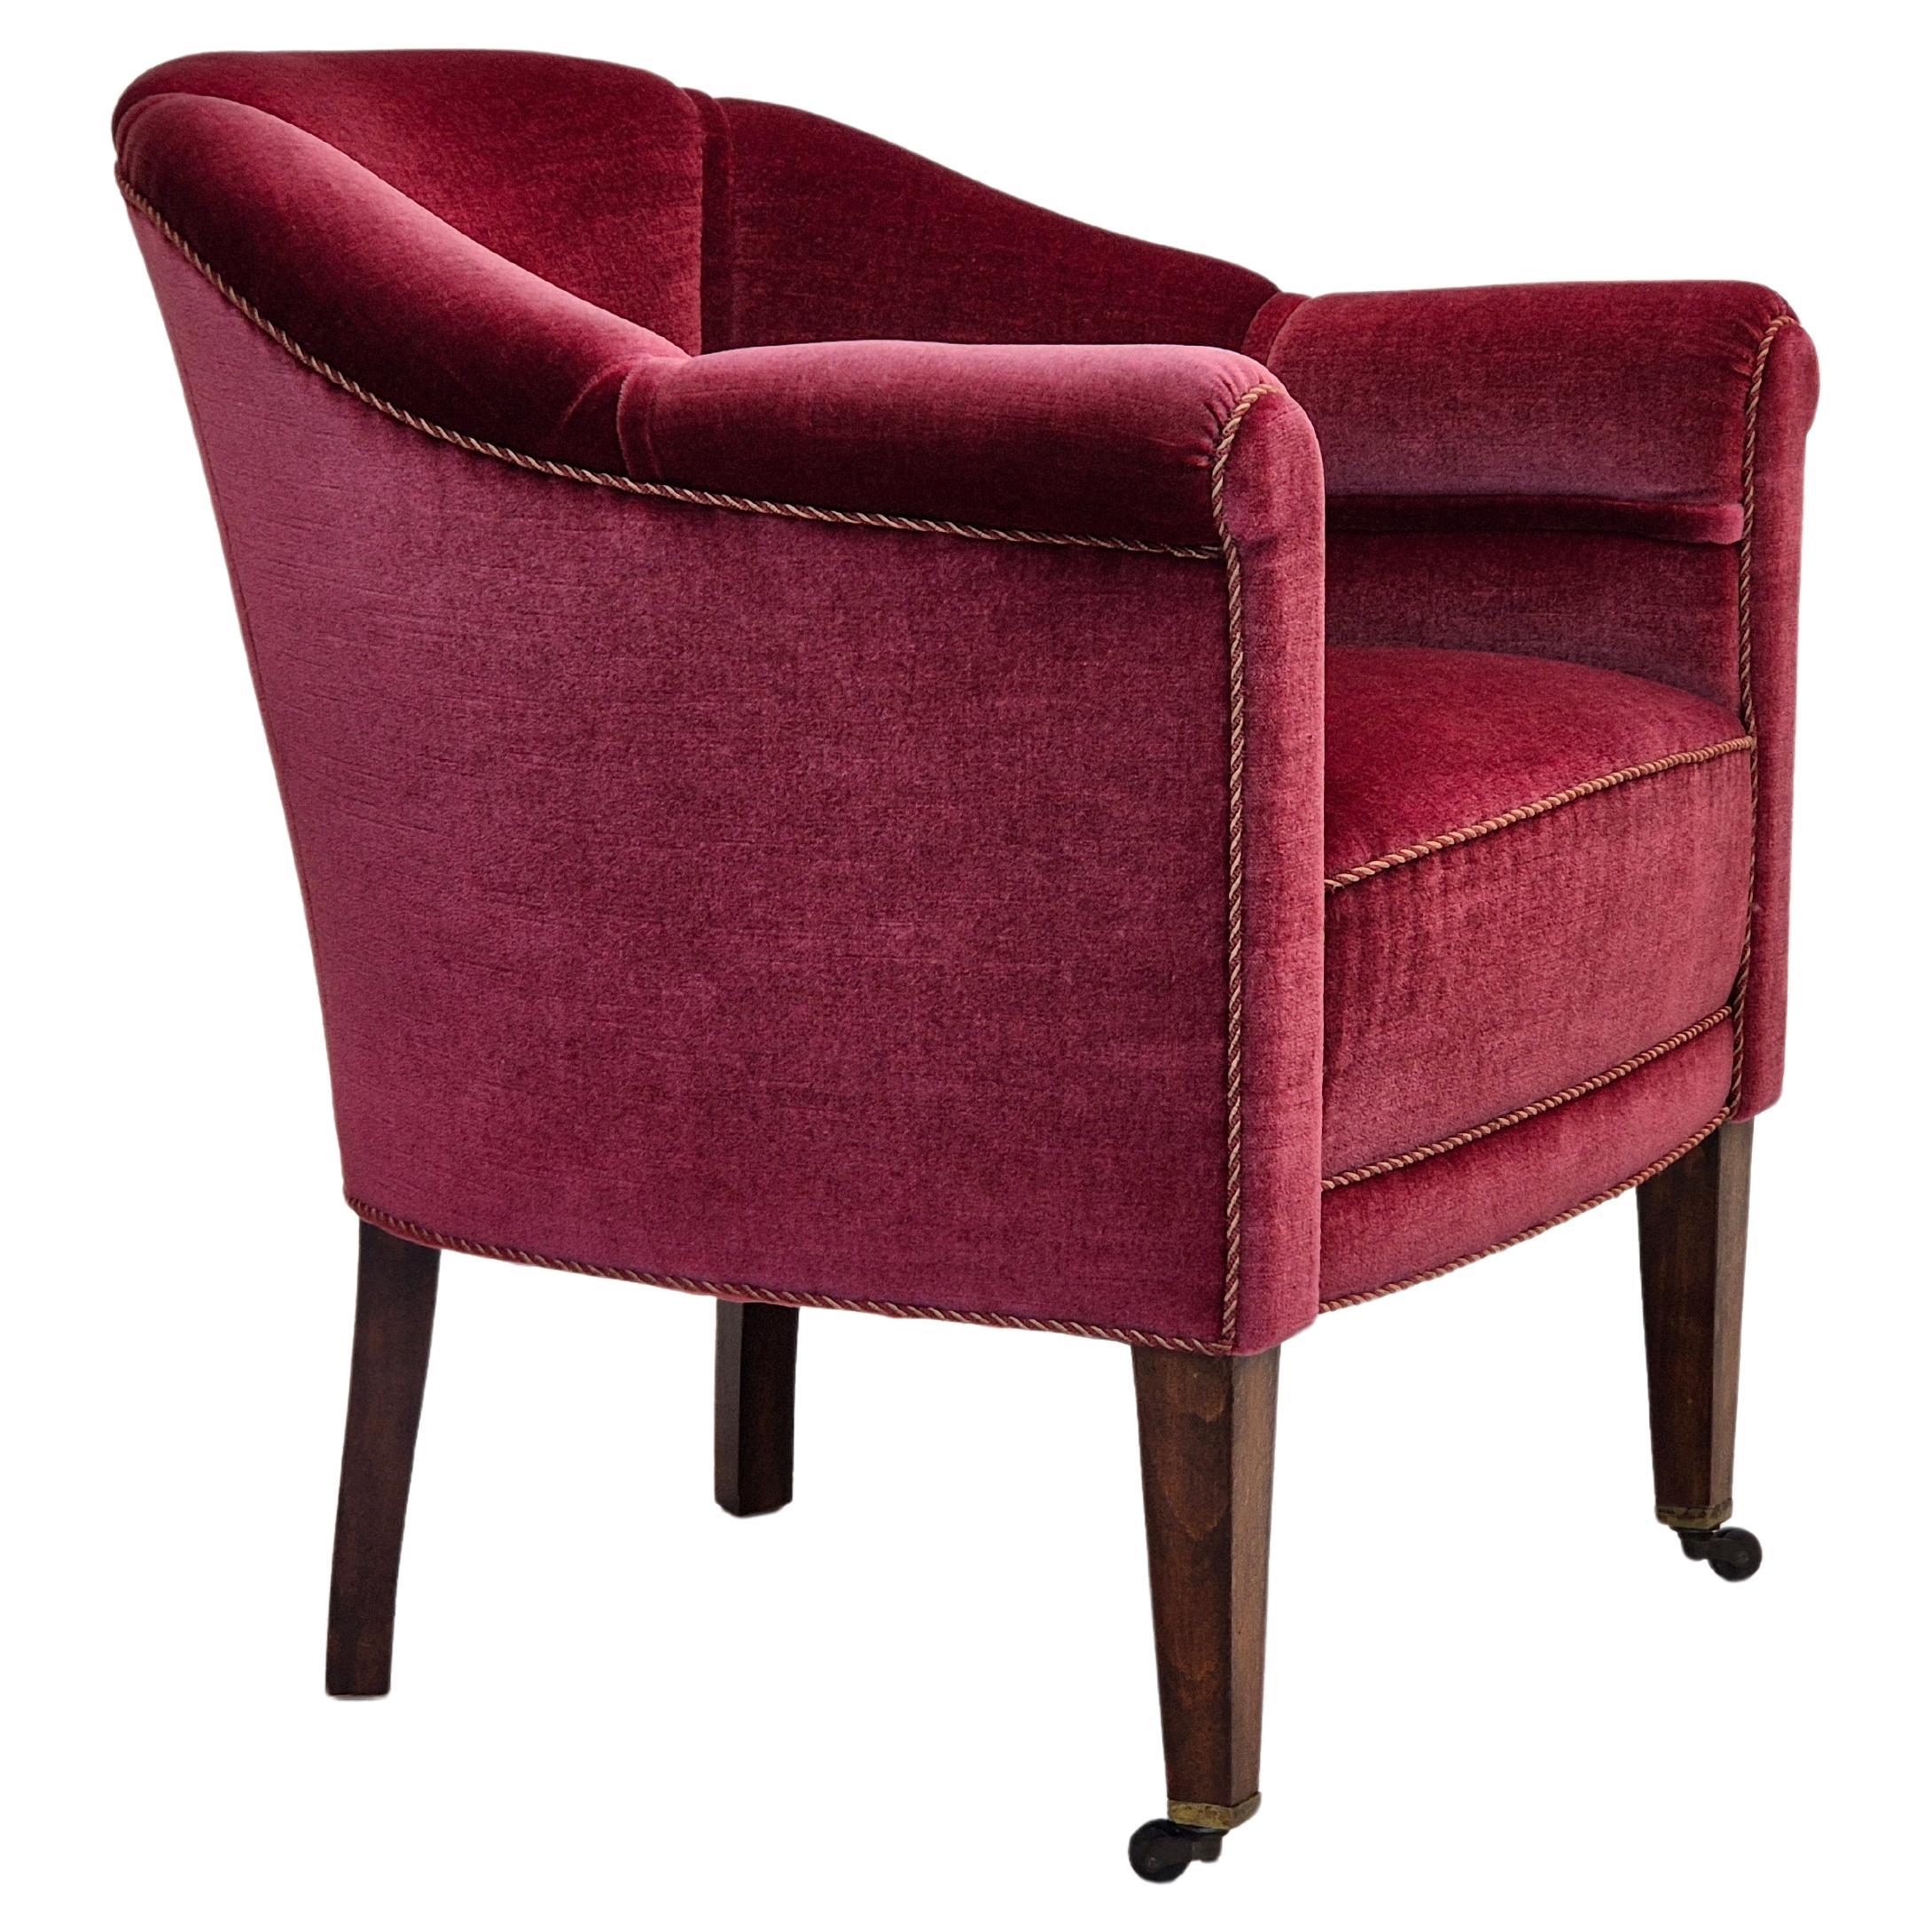 1950s, Danish lounge chair, original condition, furniture velour, ash wood legs.